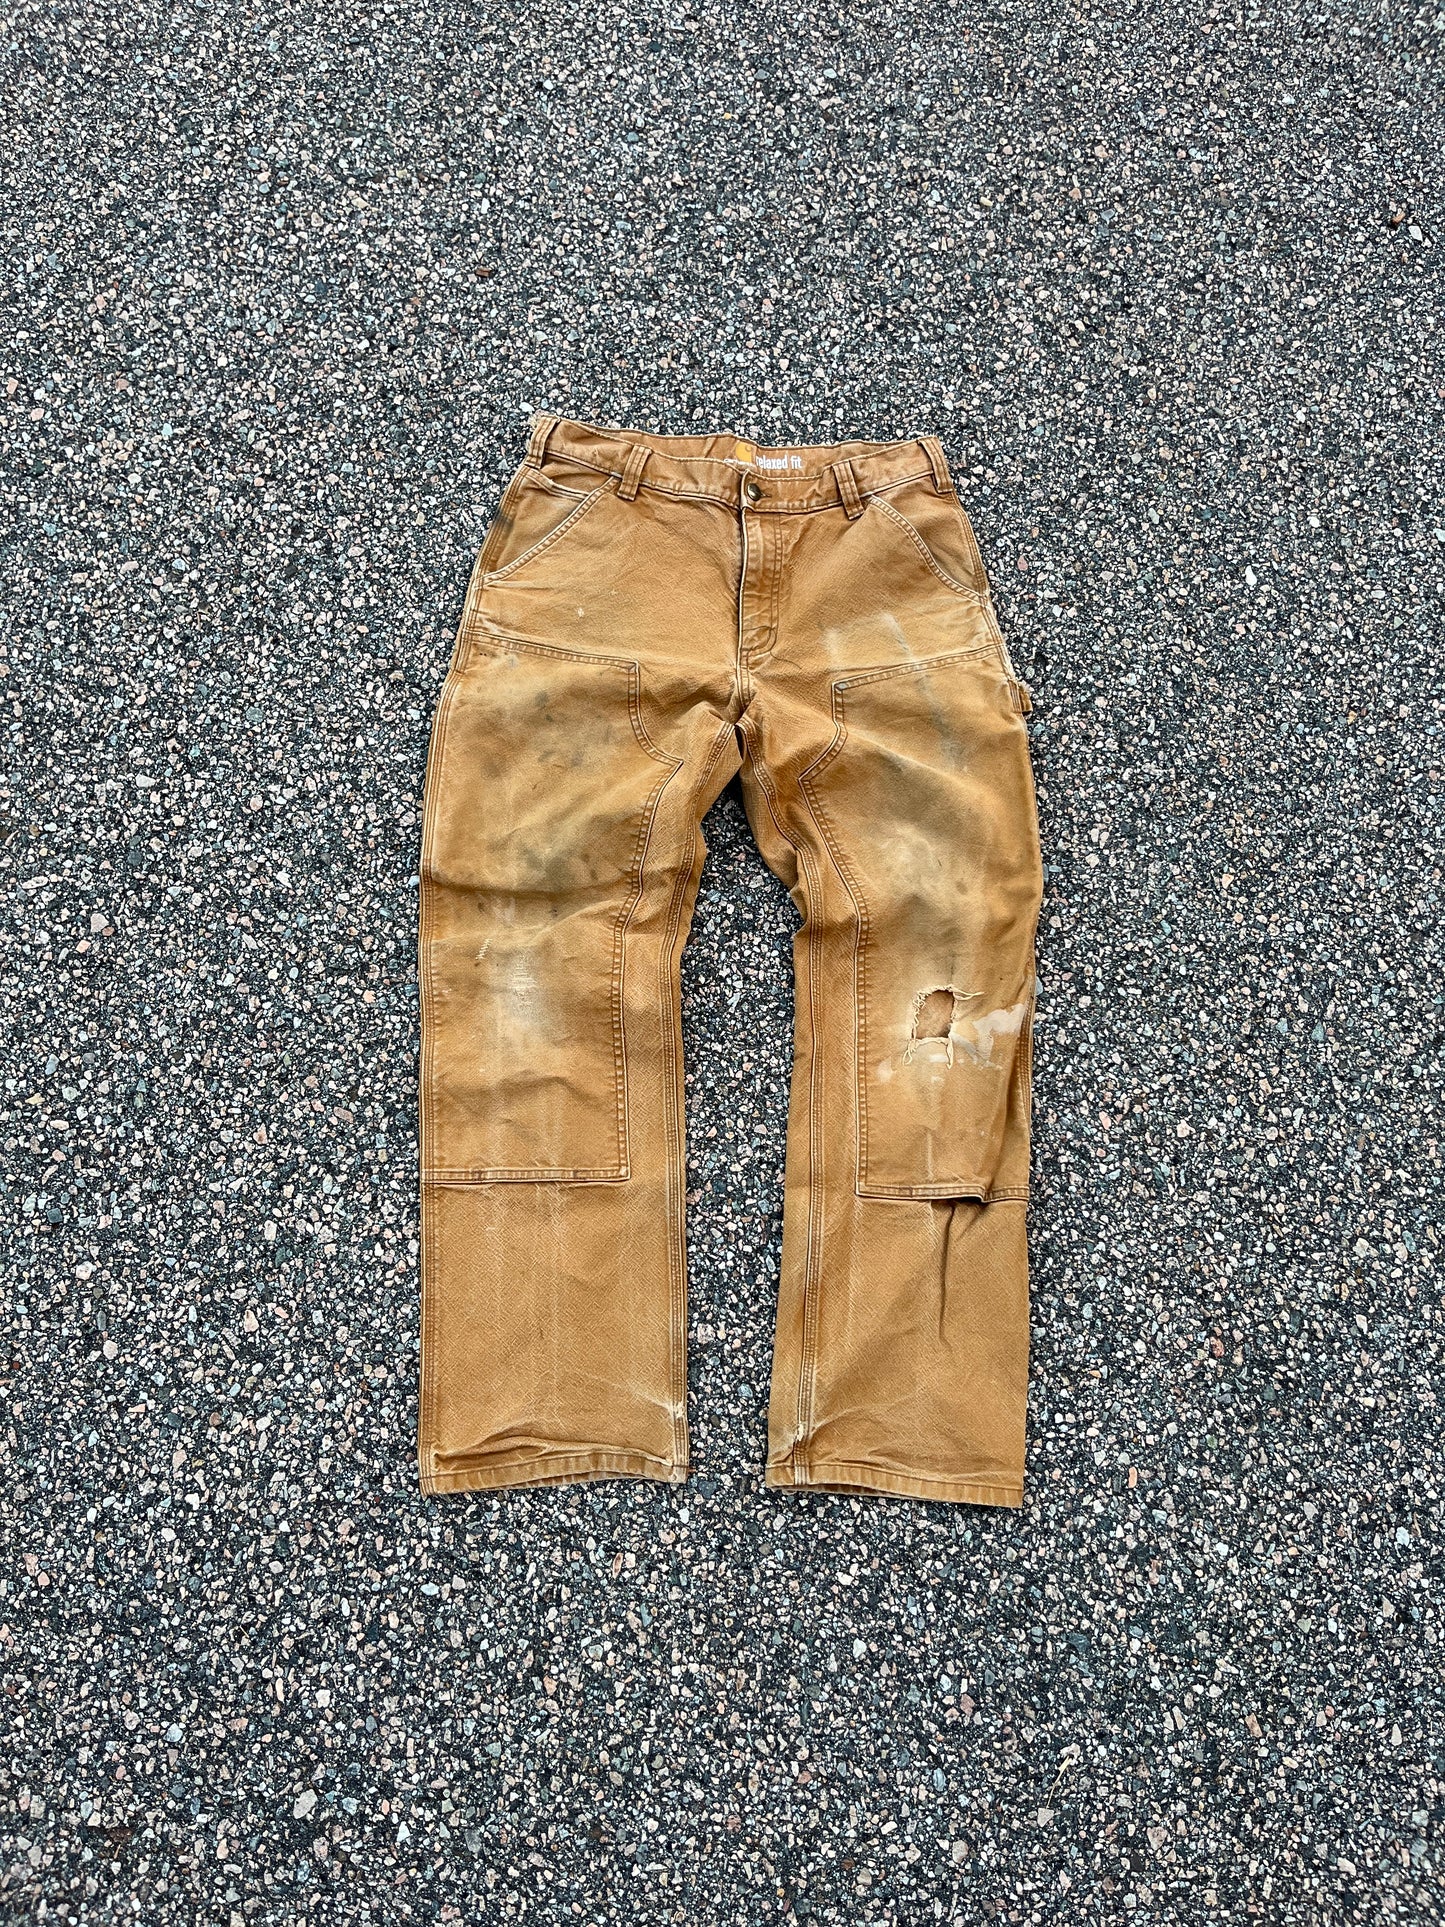 Faded Tan Carhartt Double Knee Pants - 32 x 30